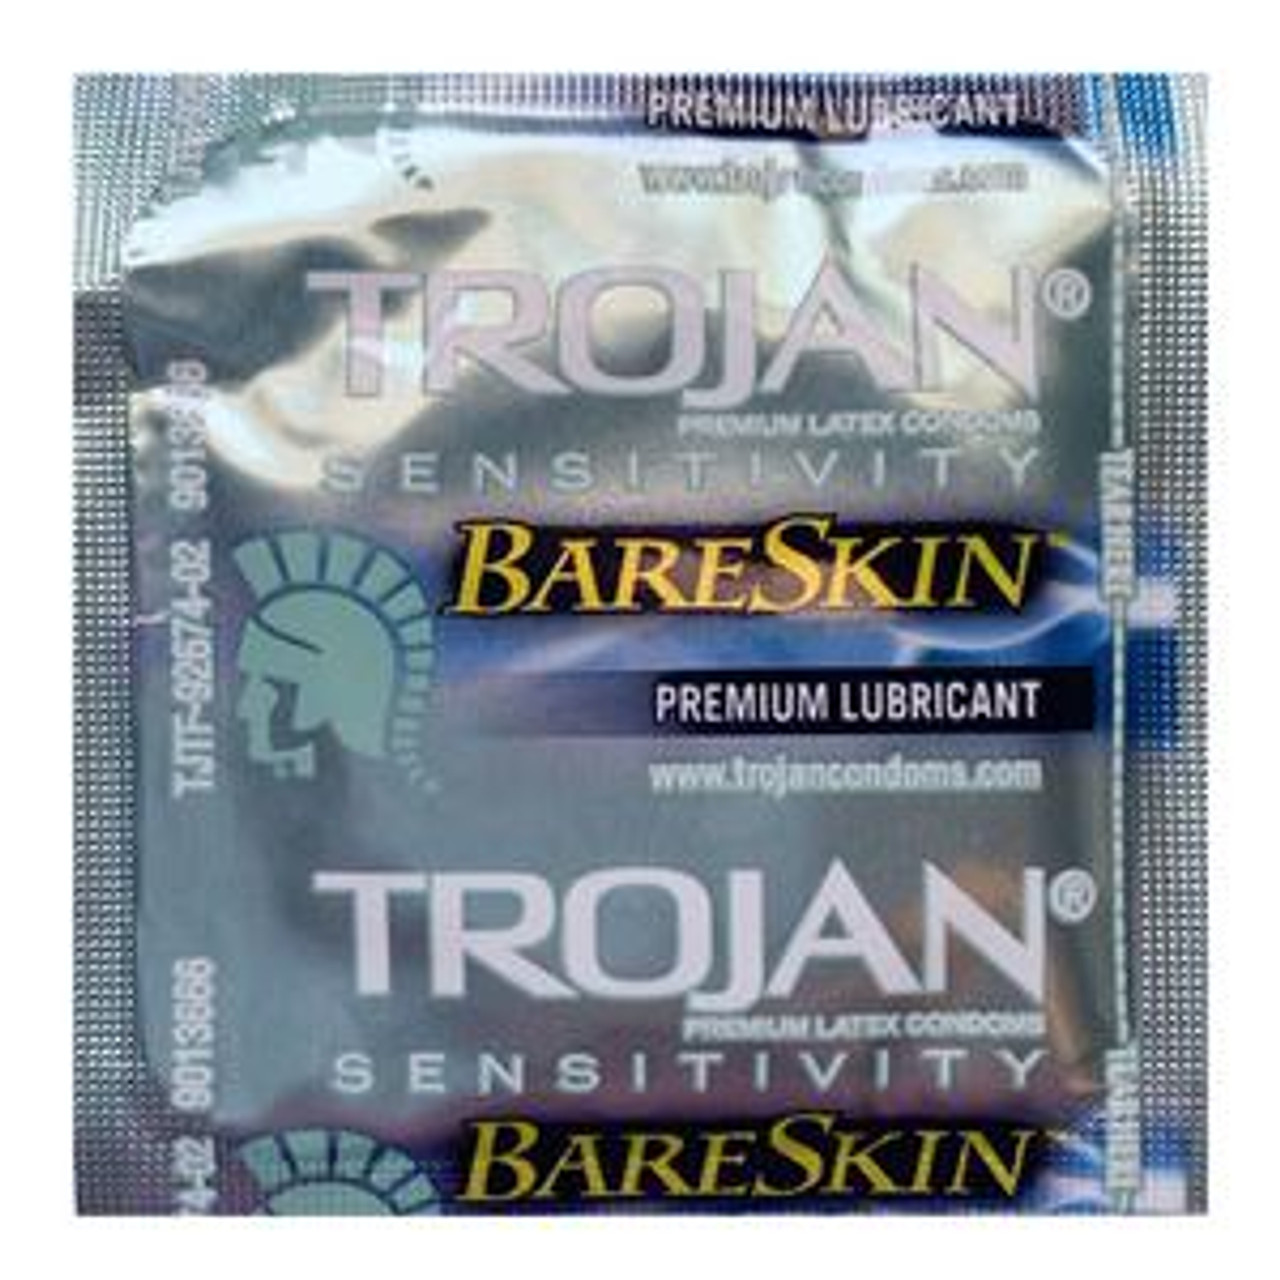 Buy Trojan BareSkin Condoms Online | CondomsFast